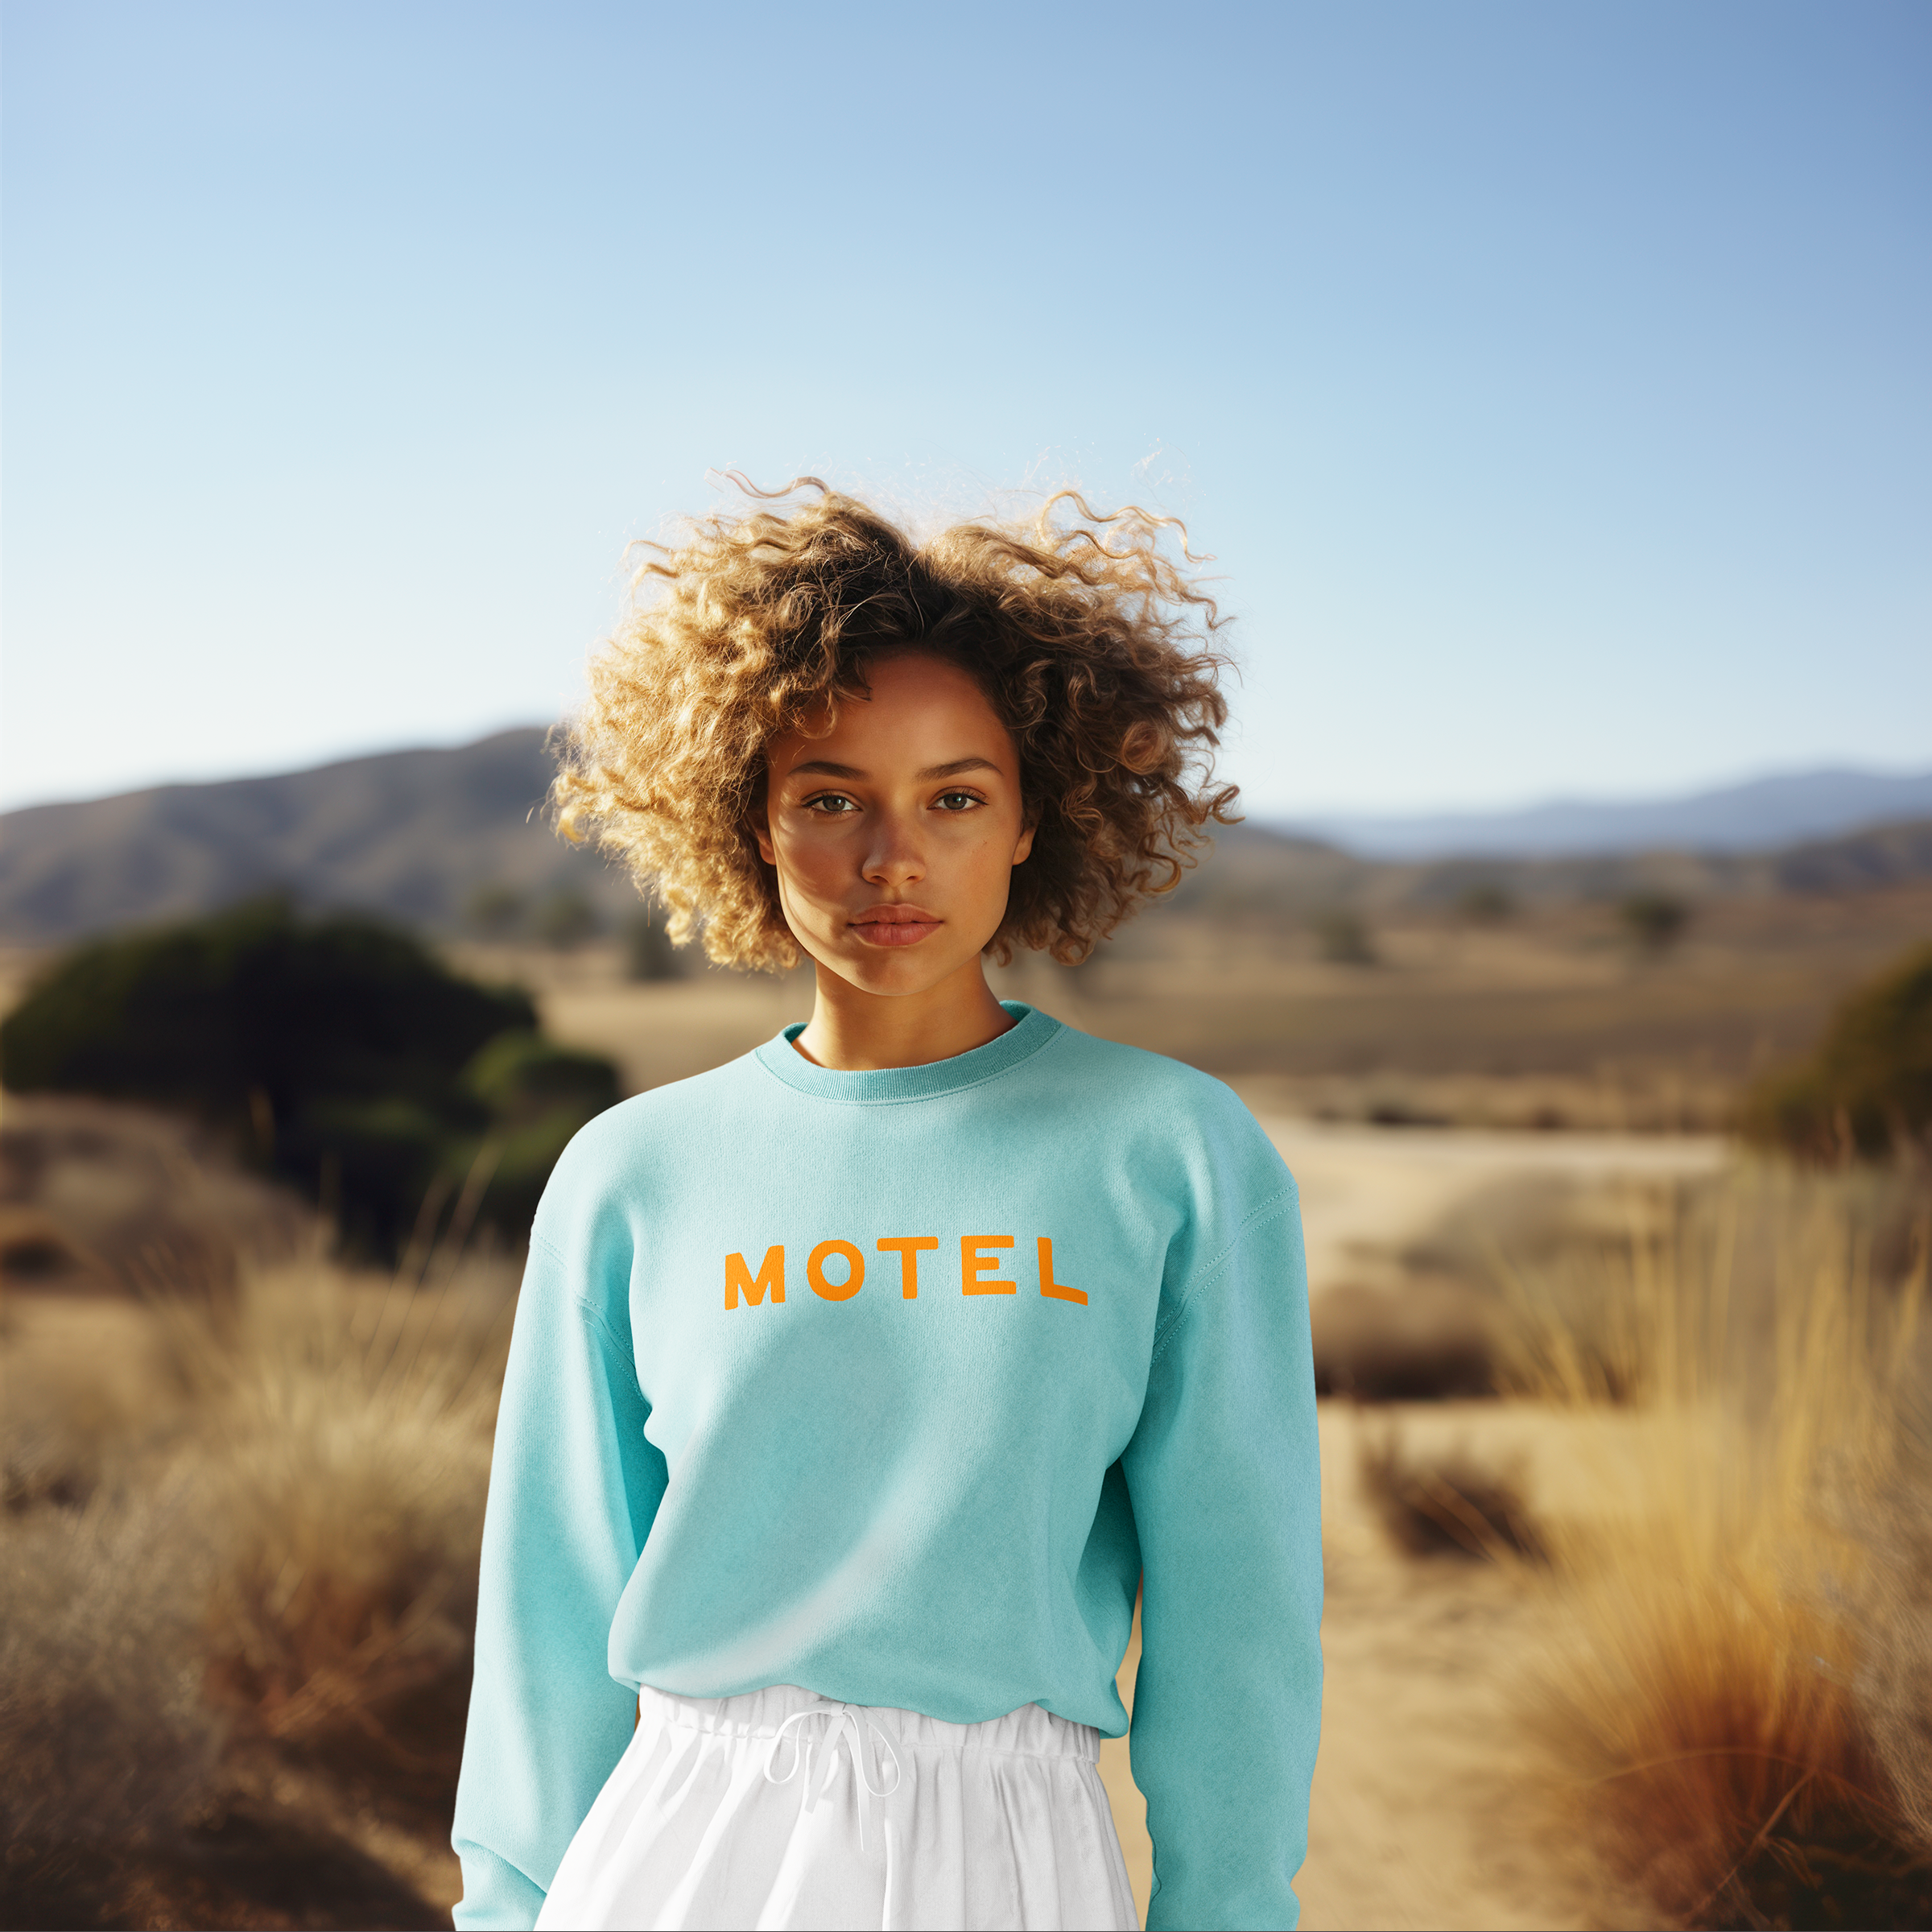 Skyview MOTEL Sweatshirt for Skyview Los Alamos by Nomada Deco